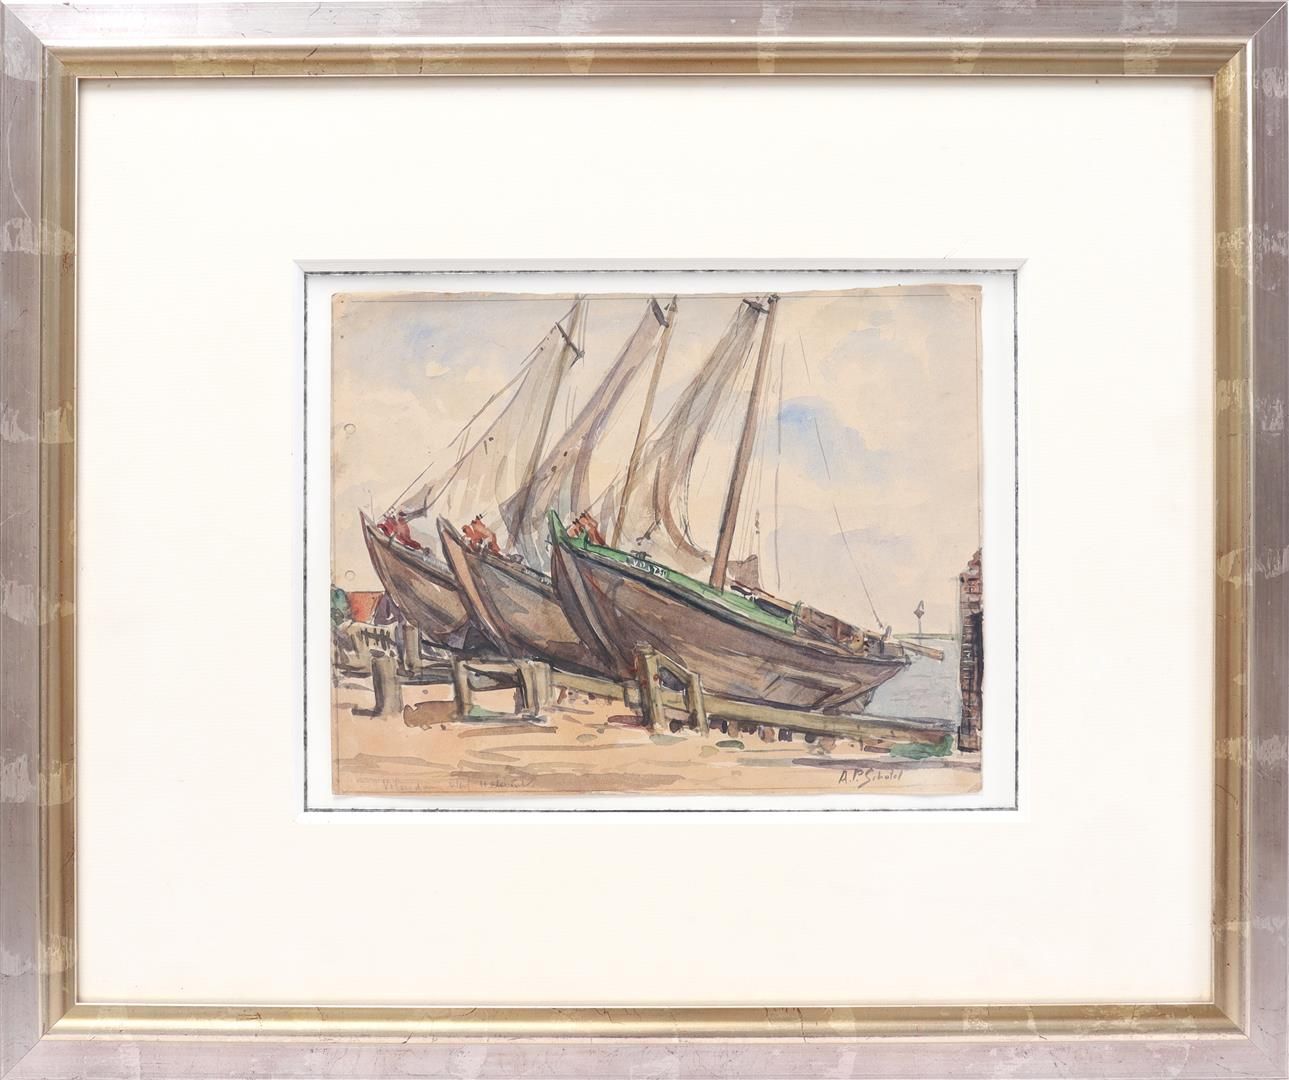 Anthonie Pieter Schotel 安东尼-皮特-肖特尔 (1890-1958)

沃伦丹与码头上的3艘船，水彩画 28x36厘米